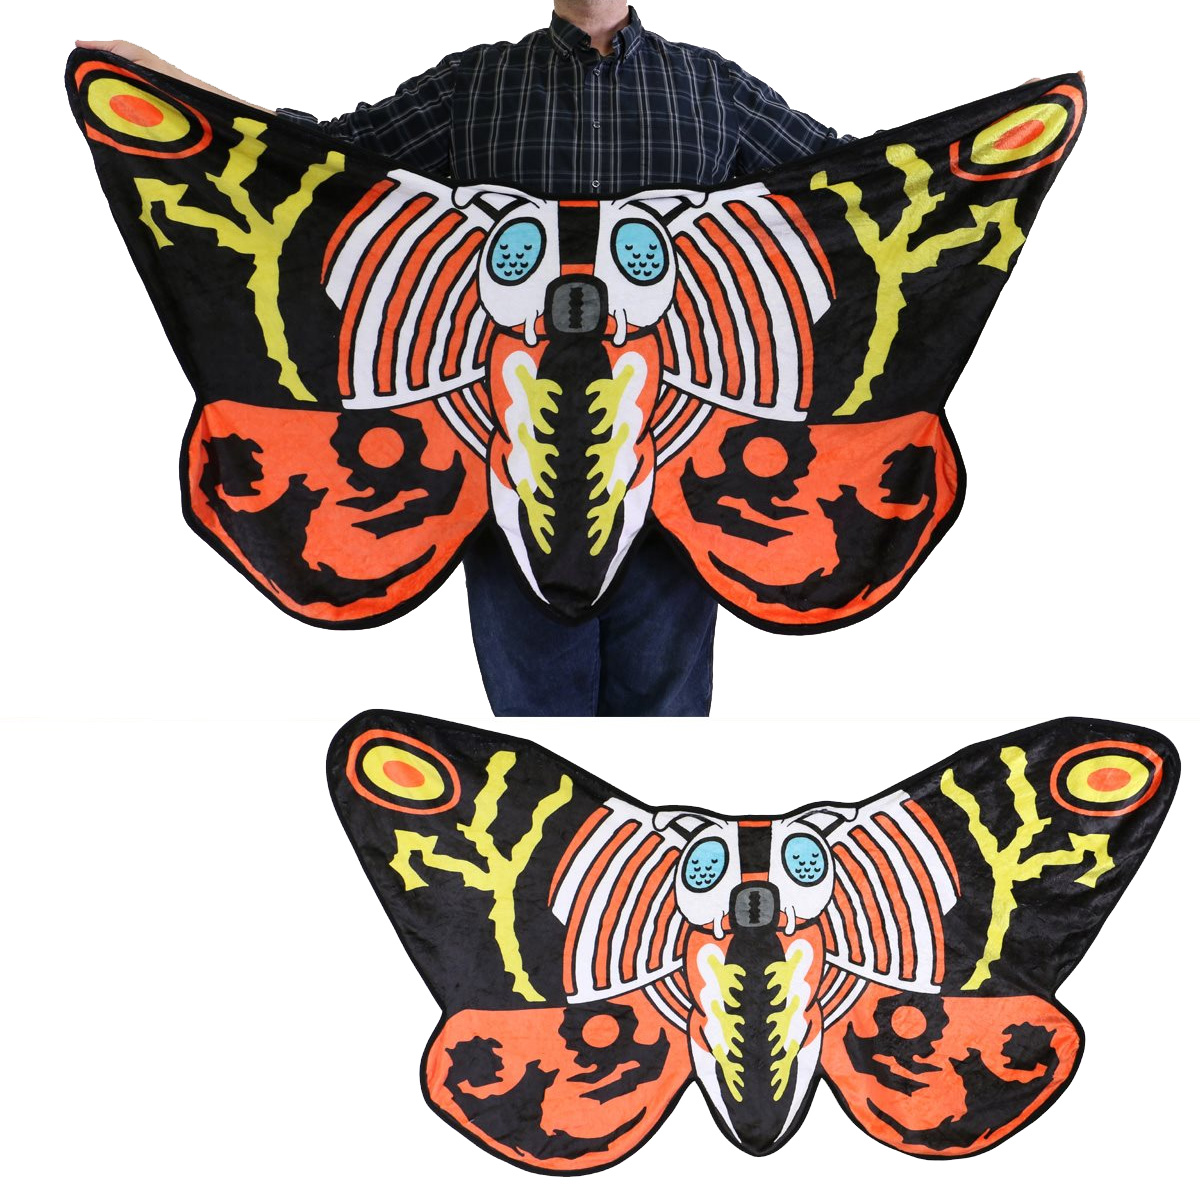 Mothra Larva Plush with Blanket Metamorphosed Mothra (Mothra vs. Godzilla 1964)